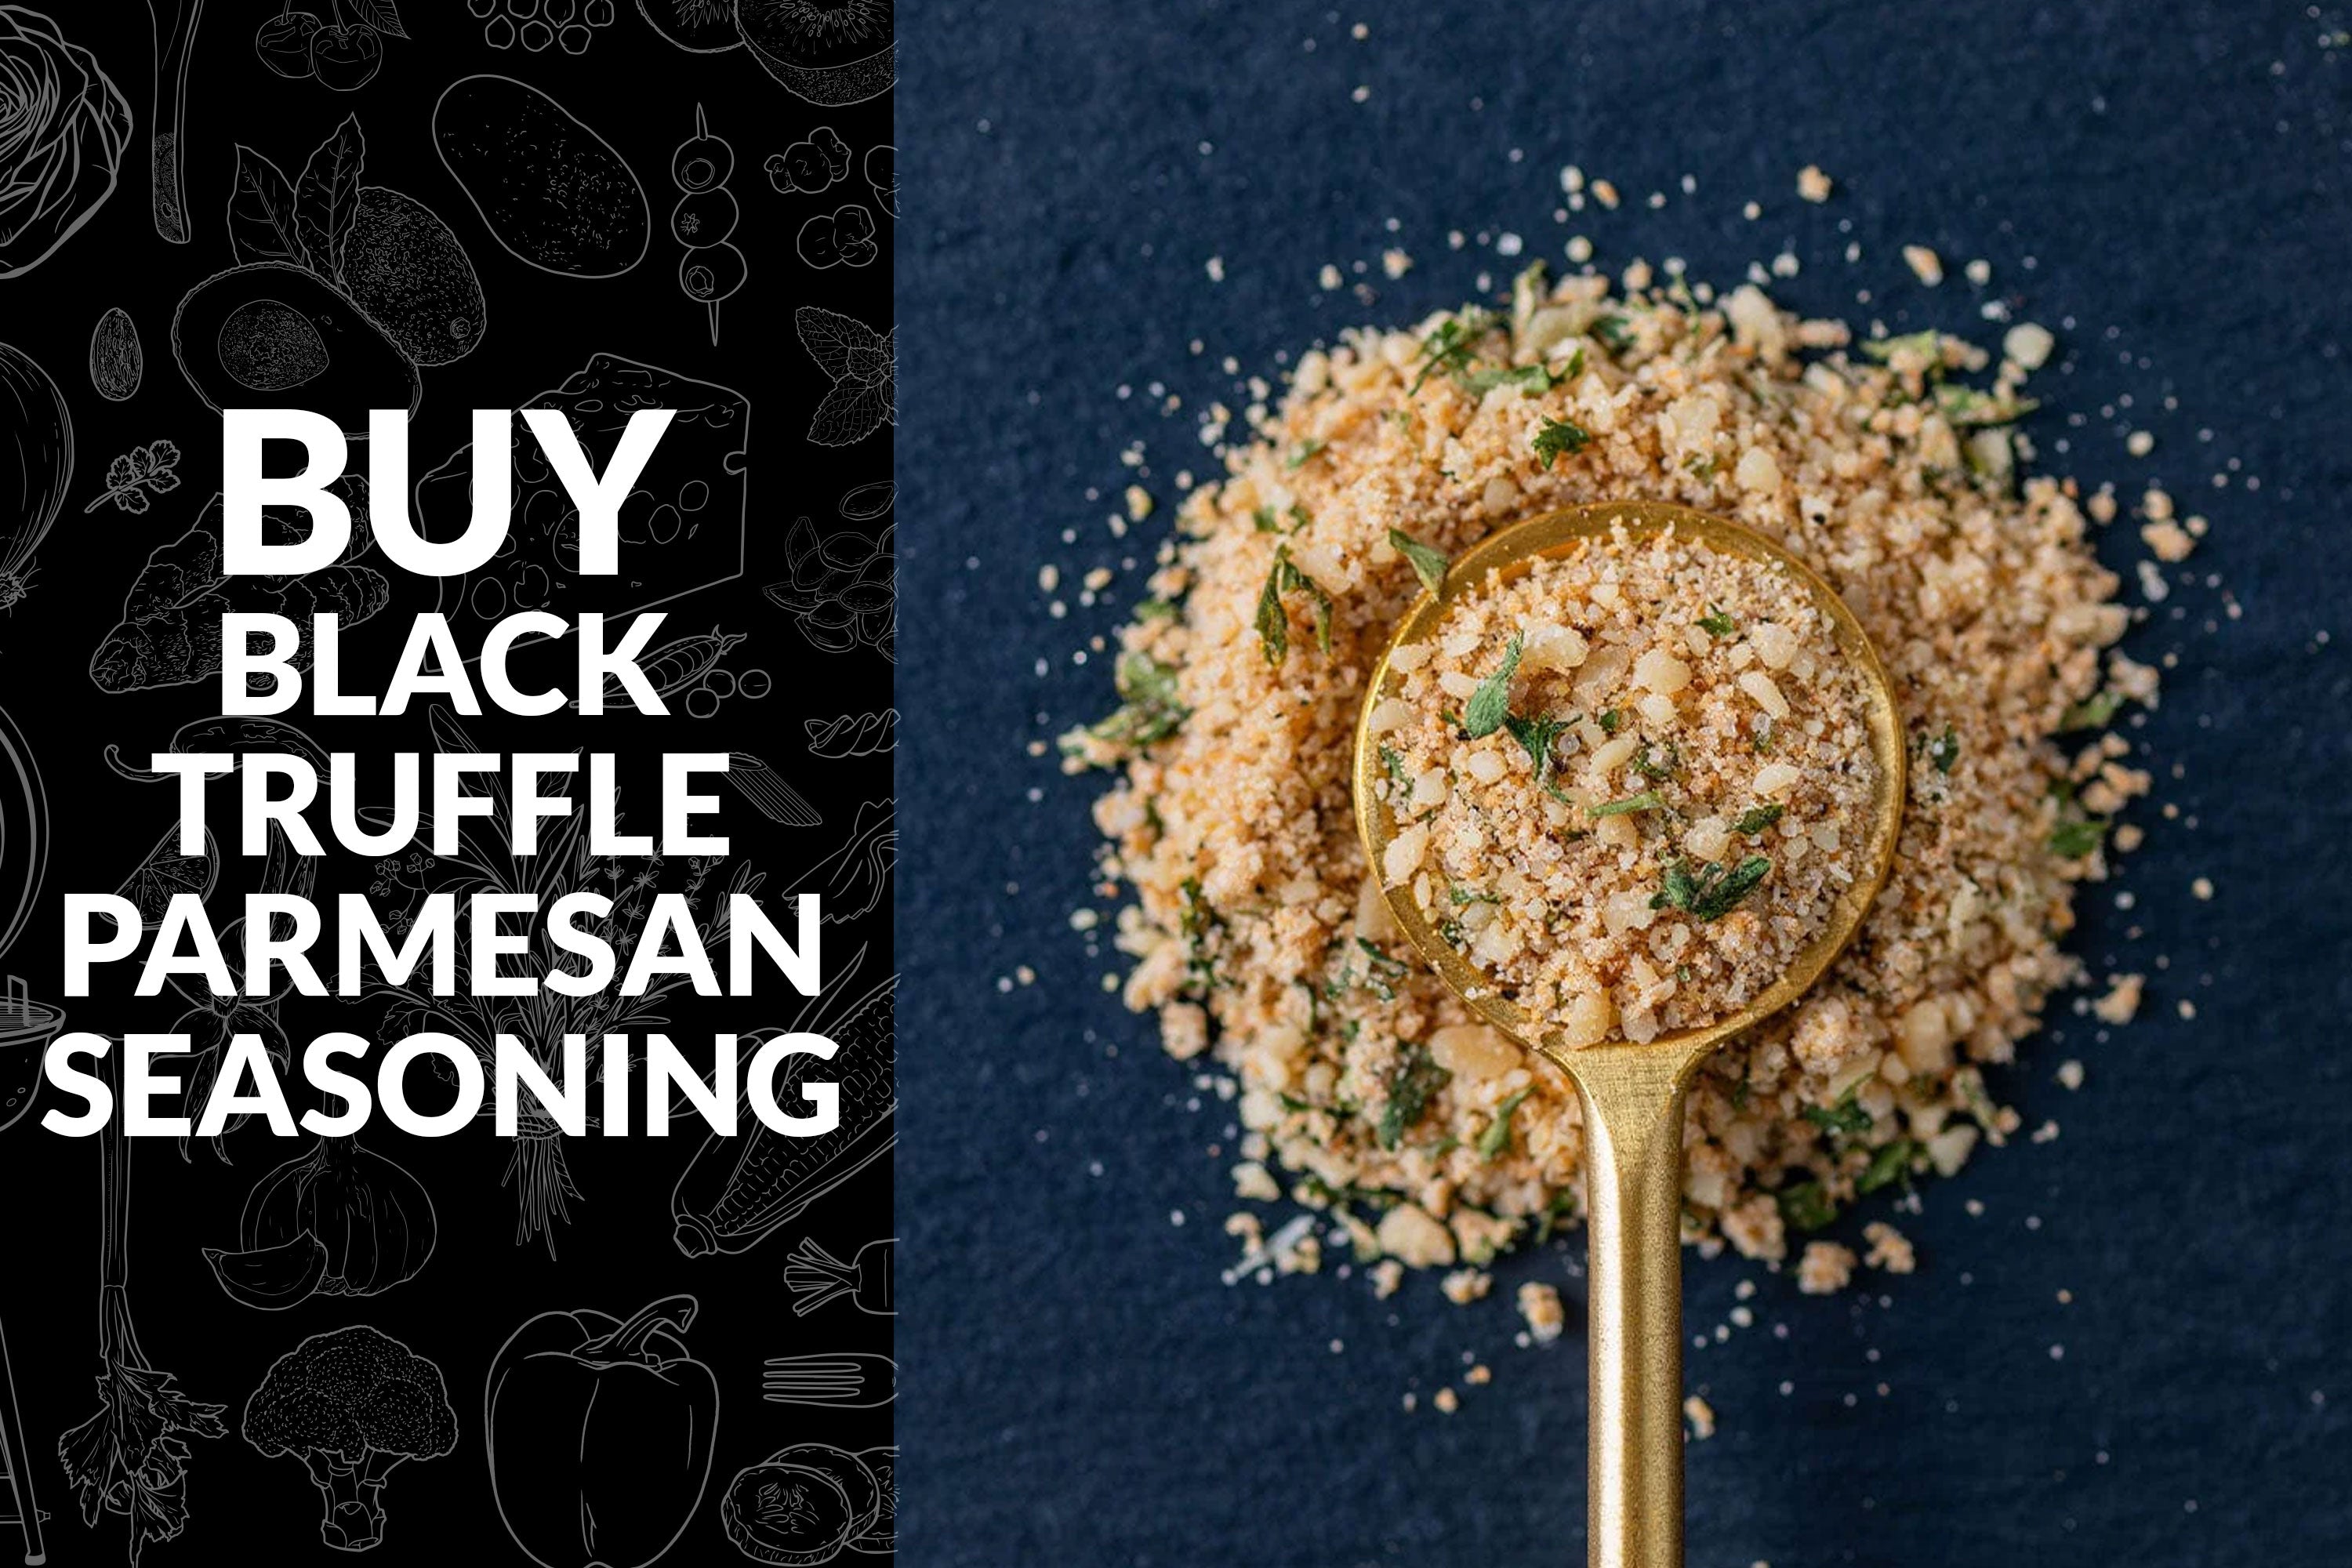 Buy Black Truffle Parmesan Seasoning on left with spoon of seasoning on right